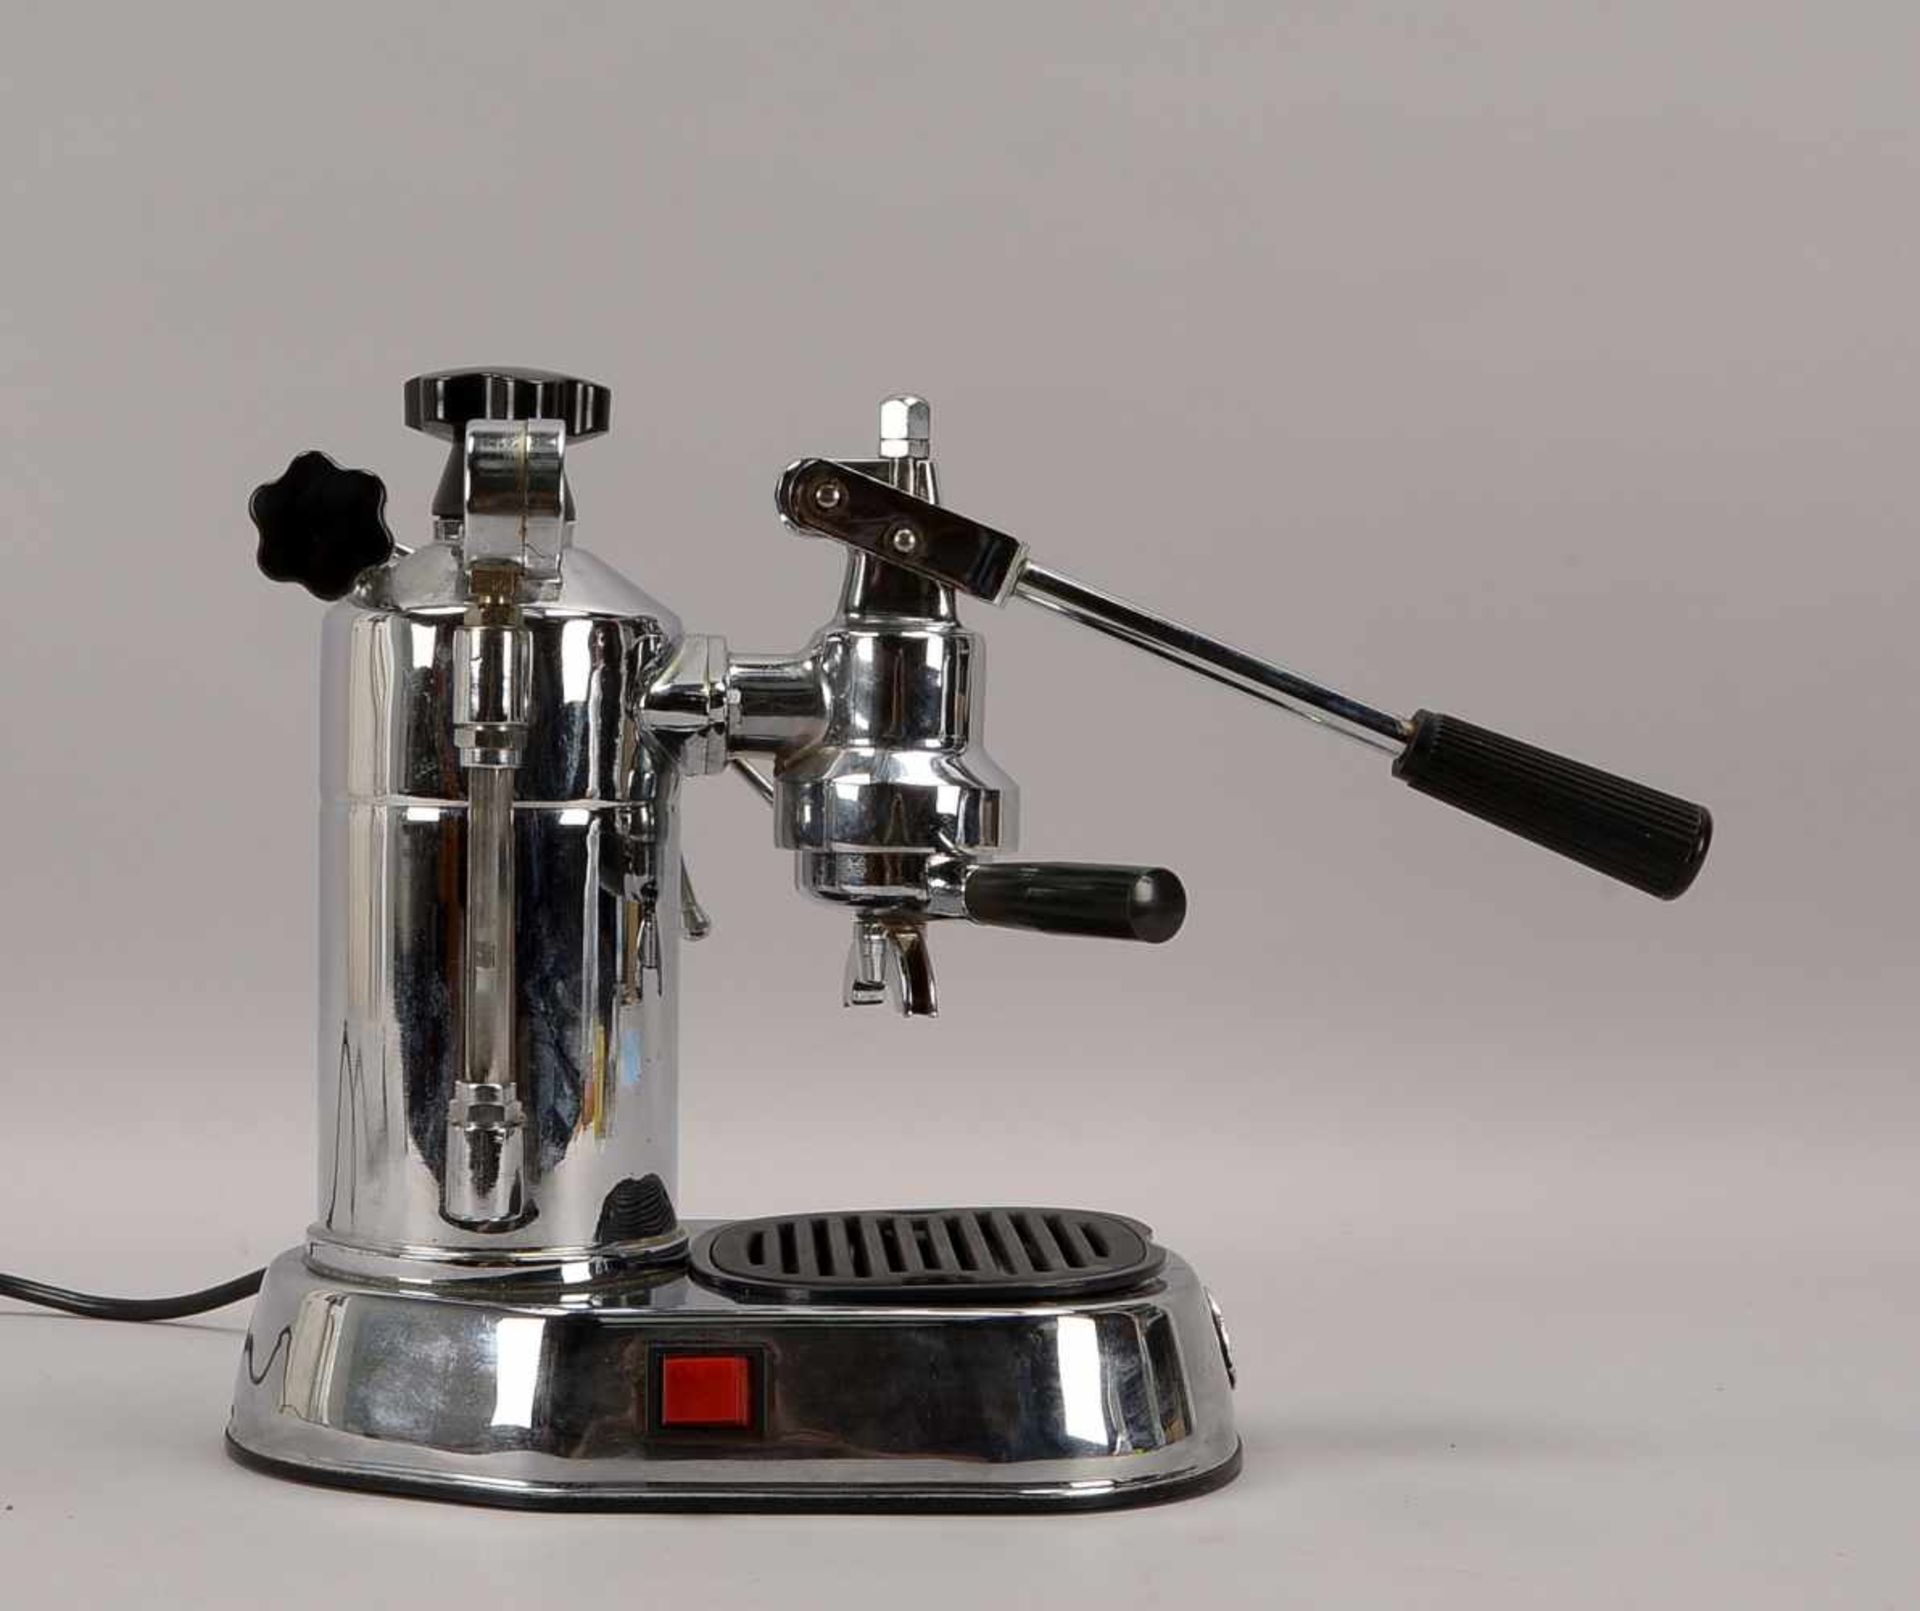 Espressomaschine, 'La Pavoni', Modell 'Professional' (zählt zu den 'Klassikern'), verchromtes